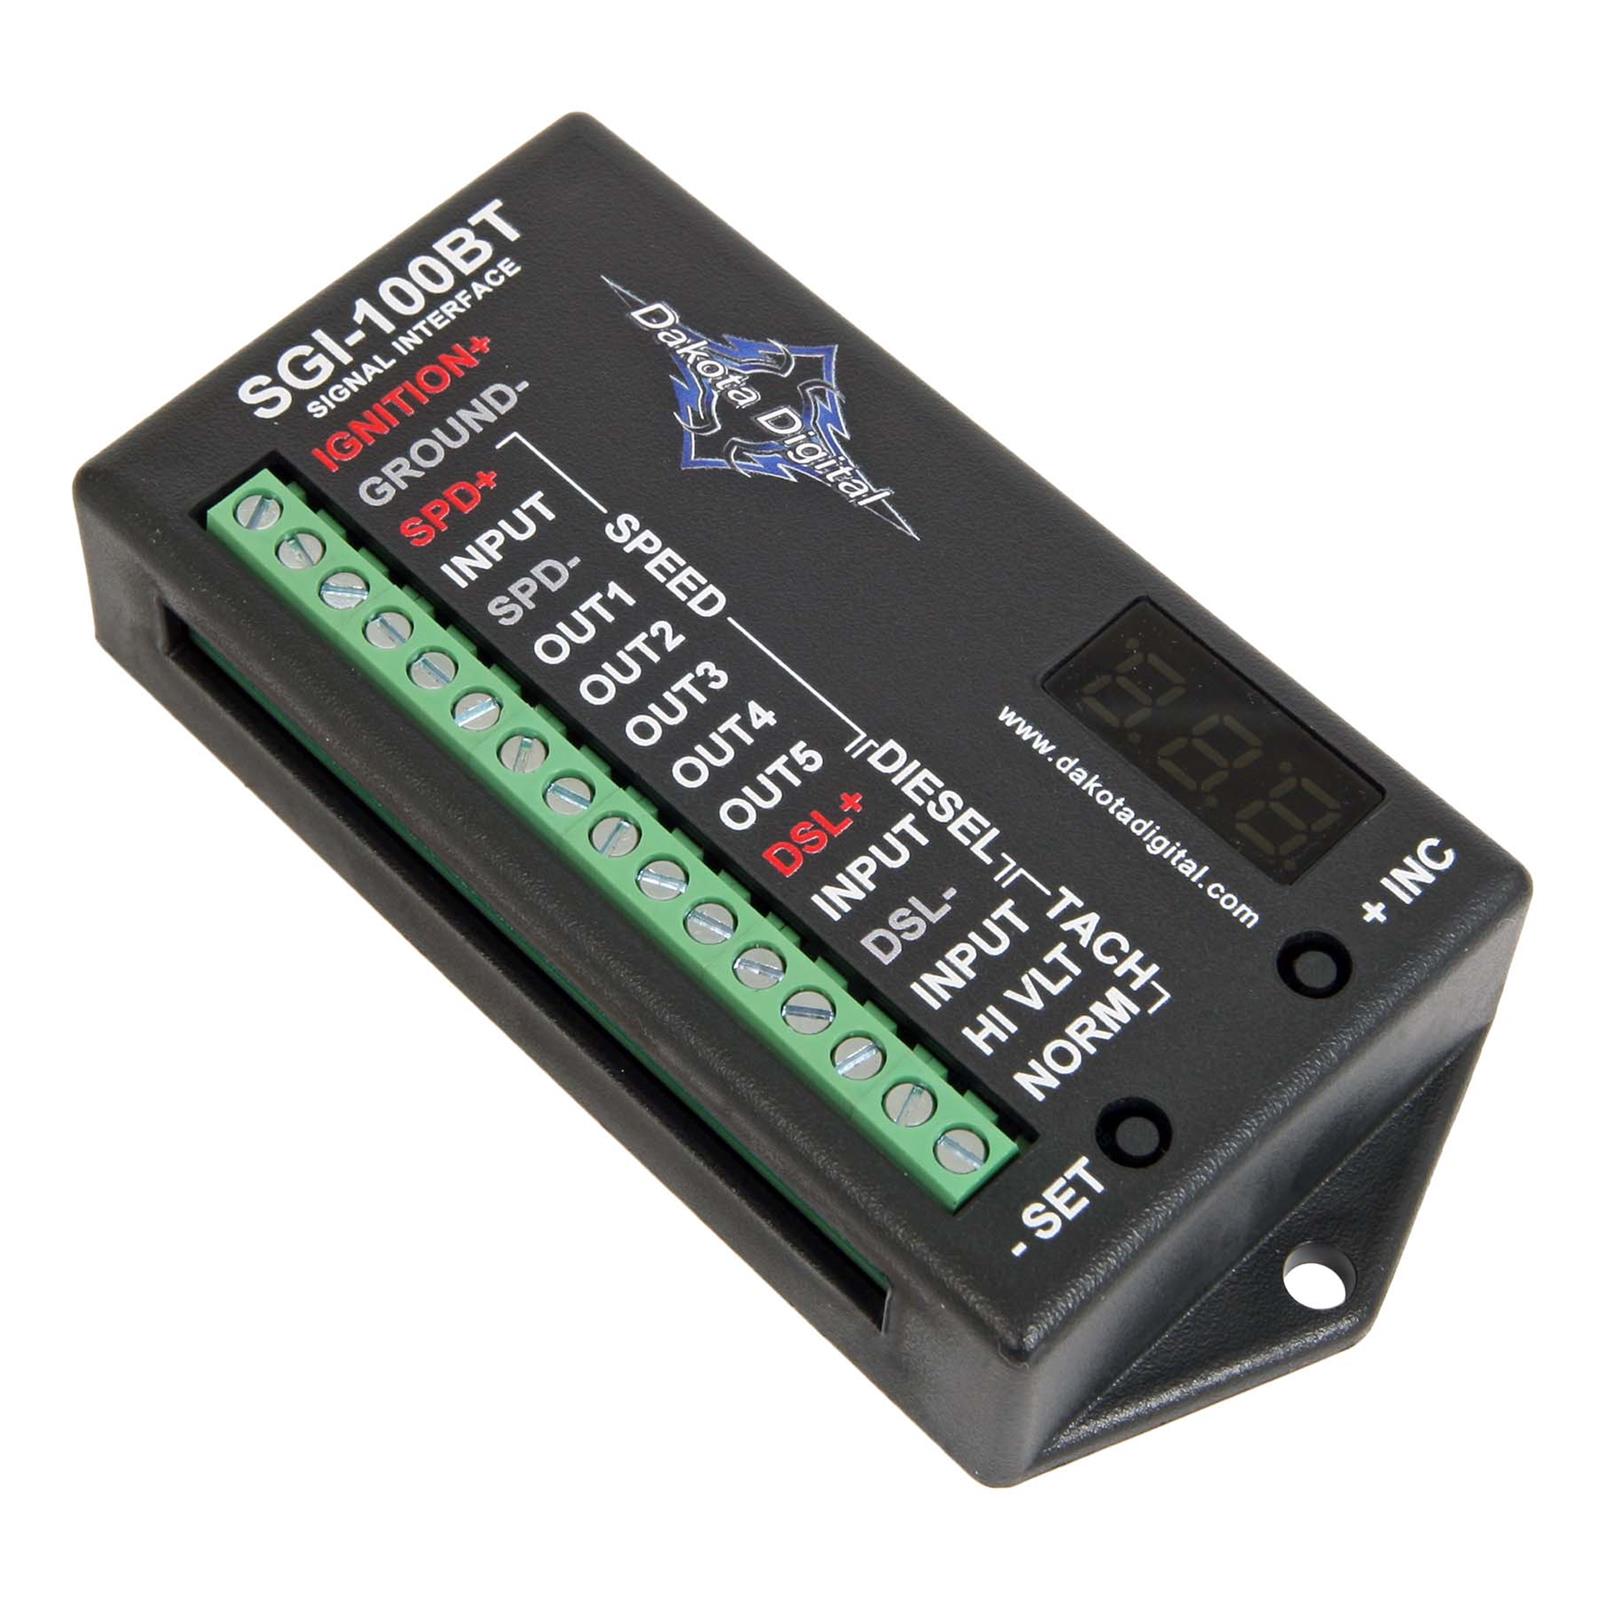 Dakota Digital SGI-100BT Universal Speedometer and Tachometer Interface 